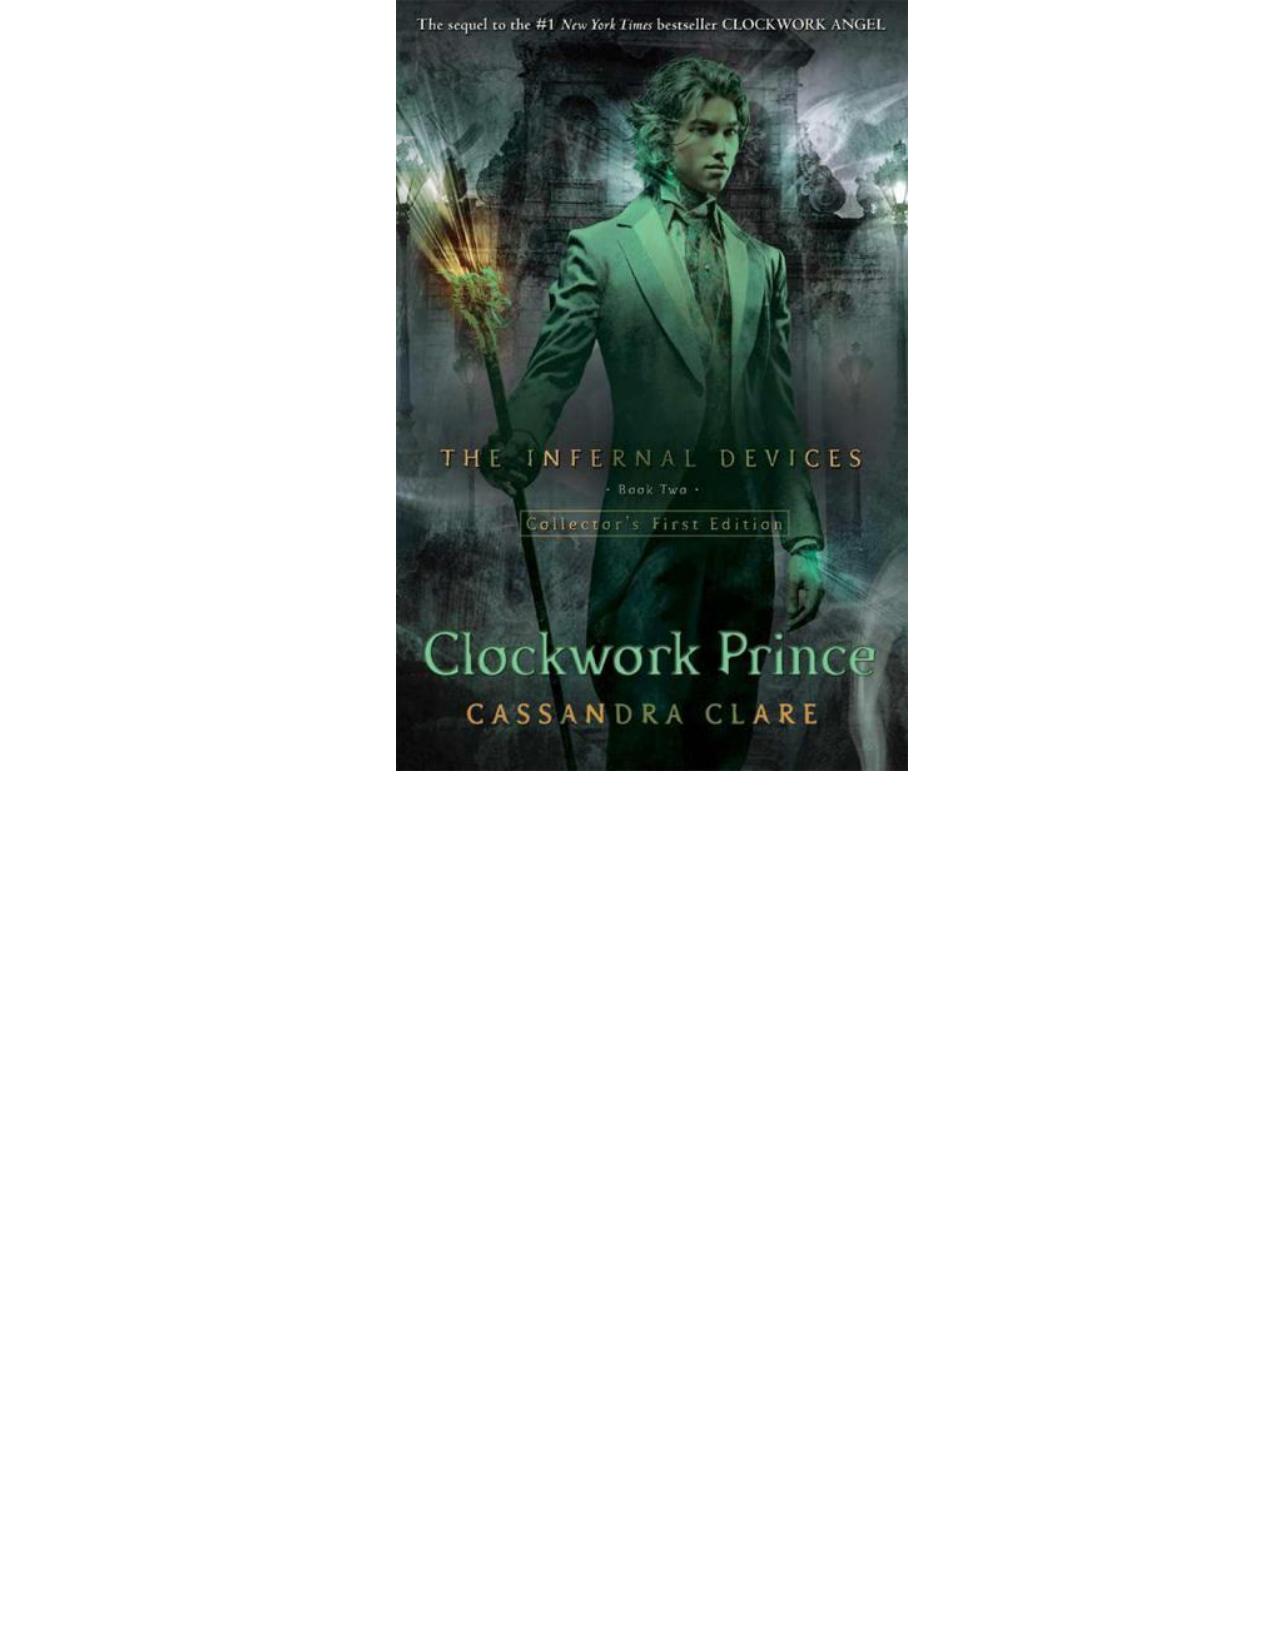 Clockwork Prince by Cassandra Clare